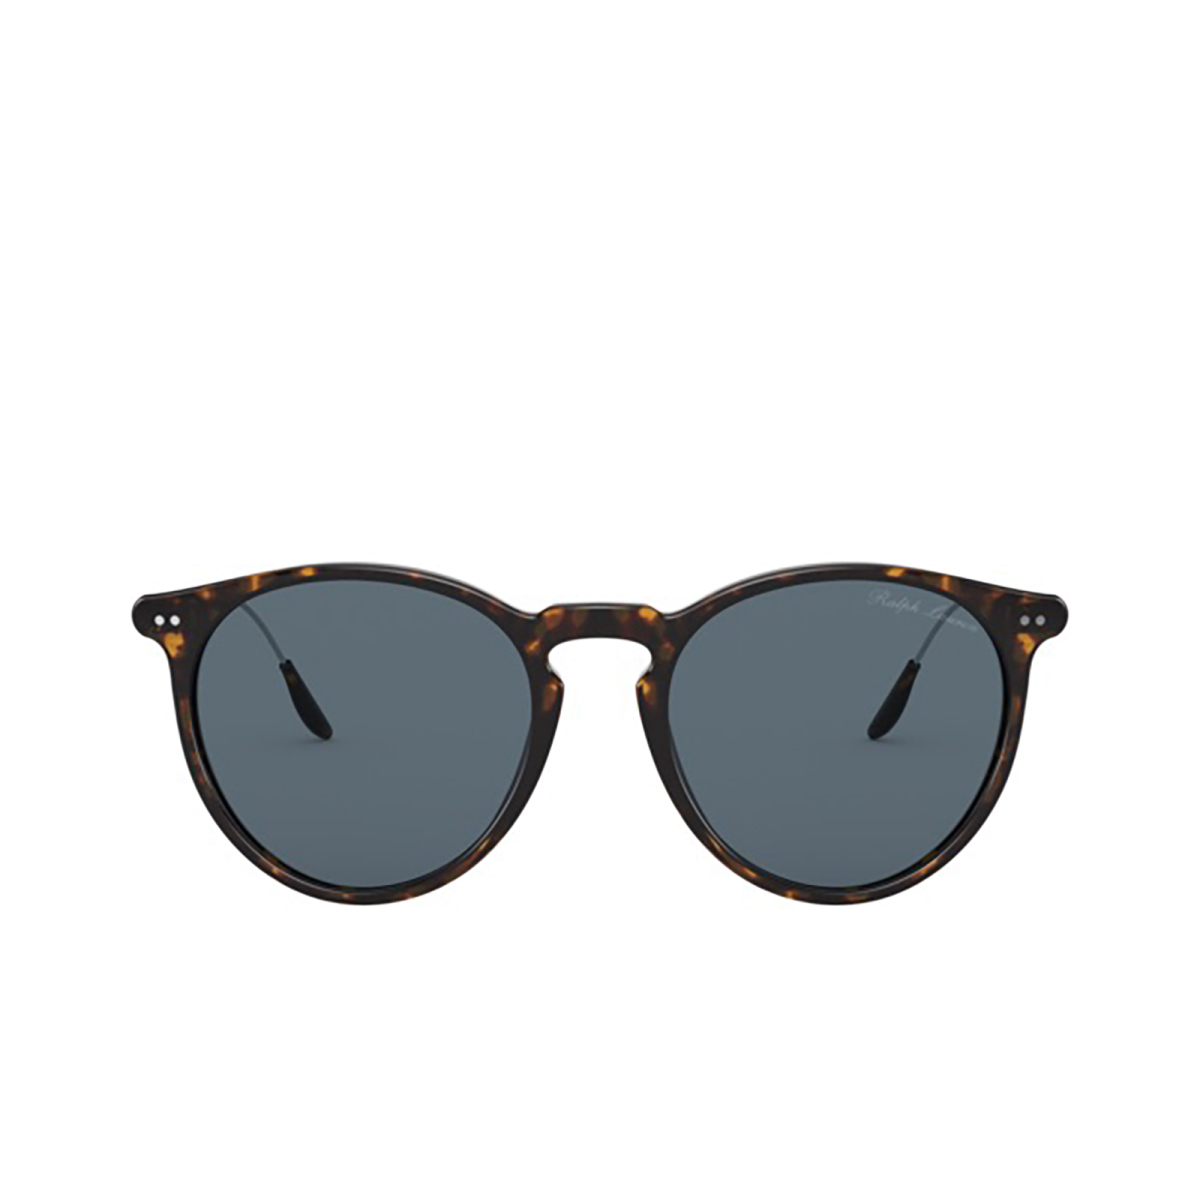 Ralph Lauren® Round Sunglasses: RL8181P color Shiny Dark Havana 5003R5 - front view.